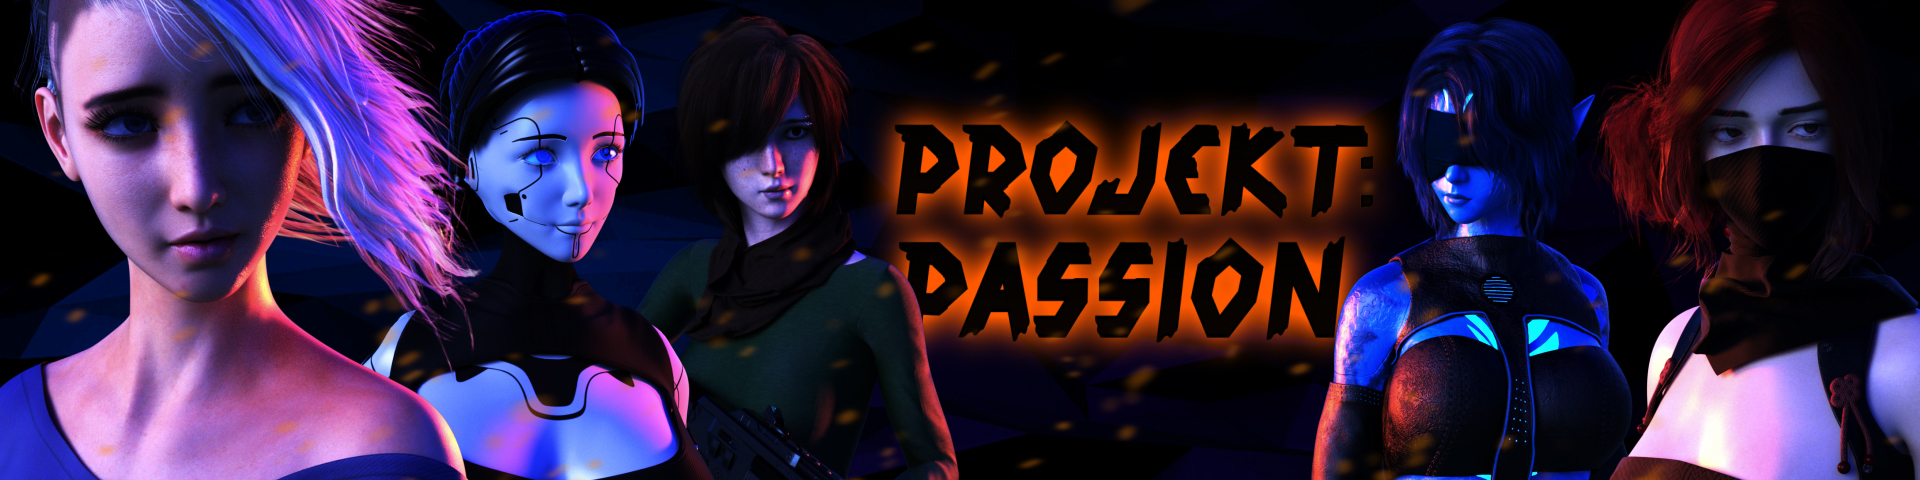 Projekt: Passion